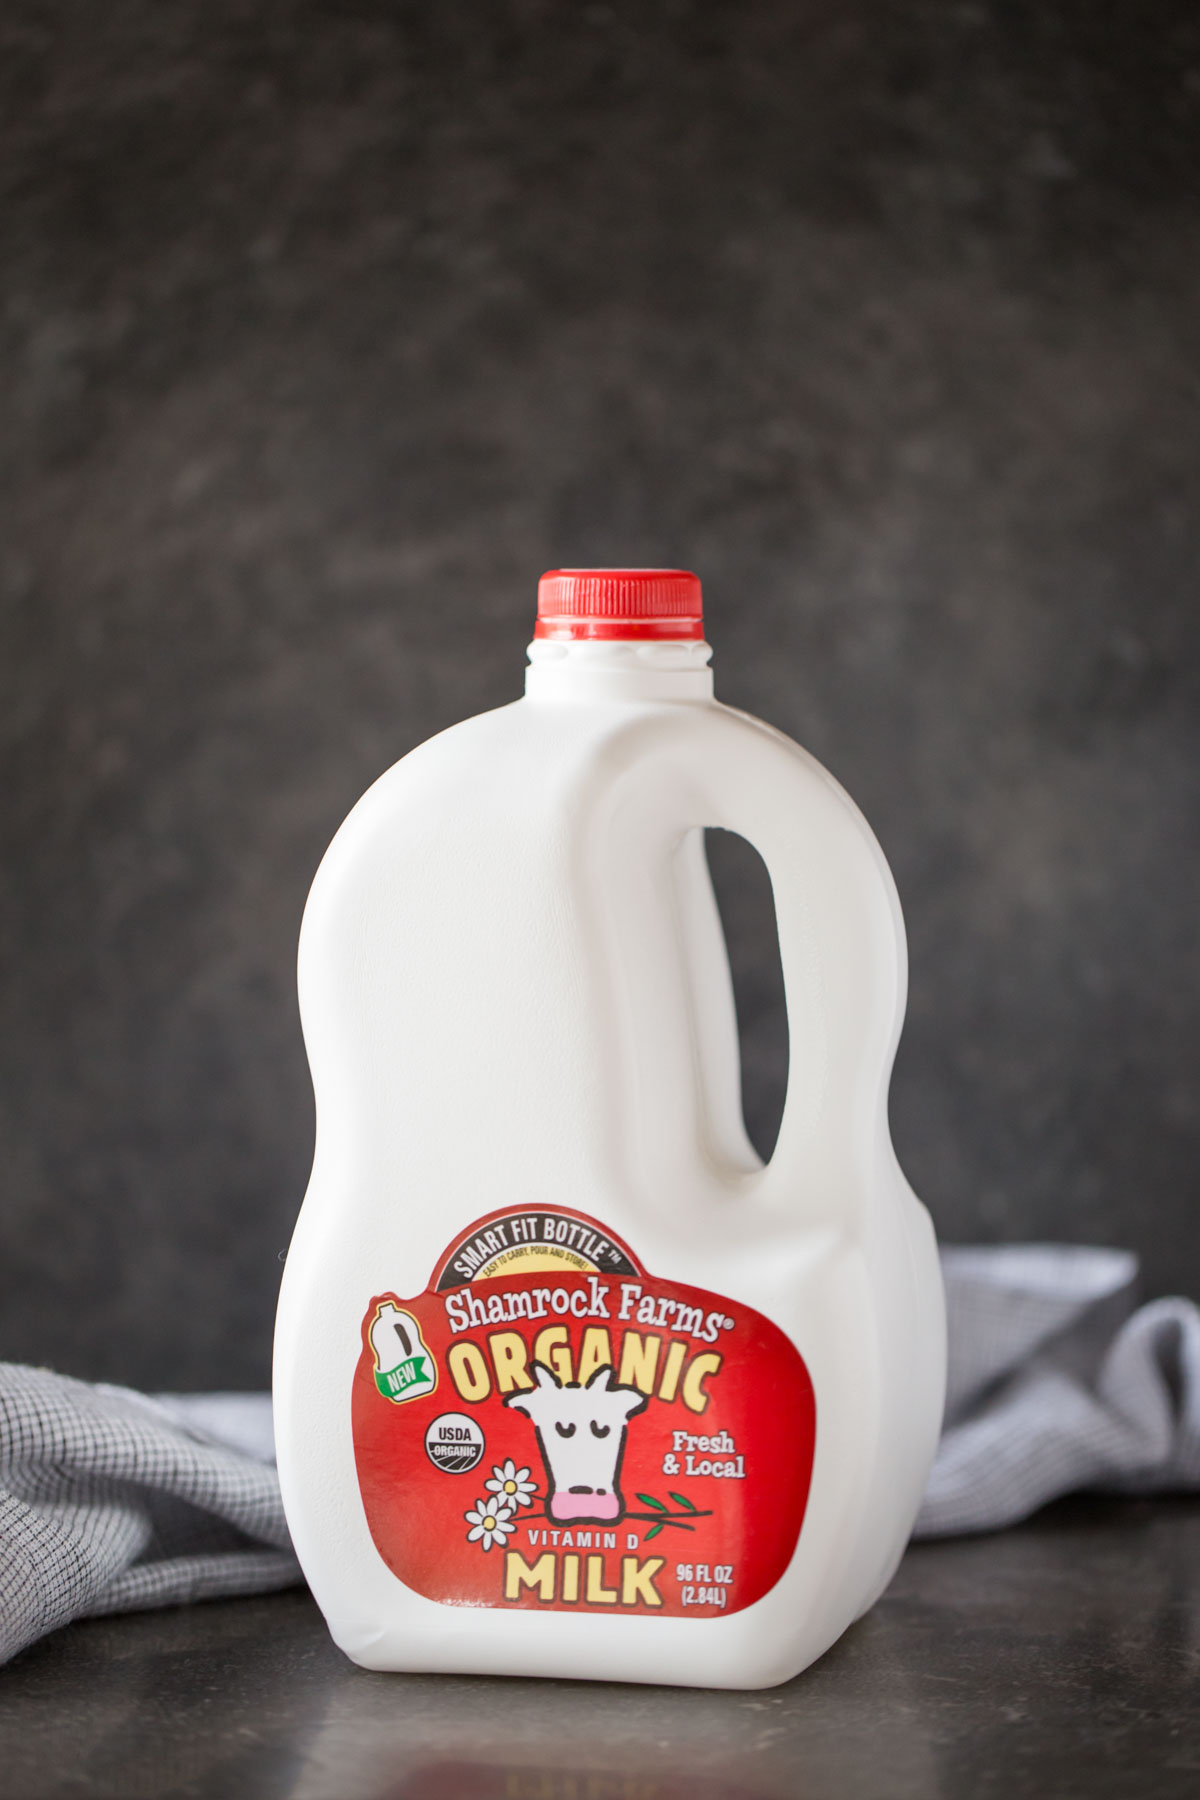 A Shamrock Farms Organic Milk jug for the Chia Pudding Parfaits.